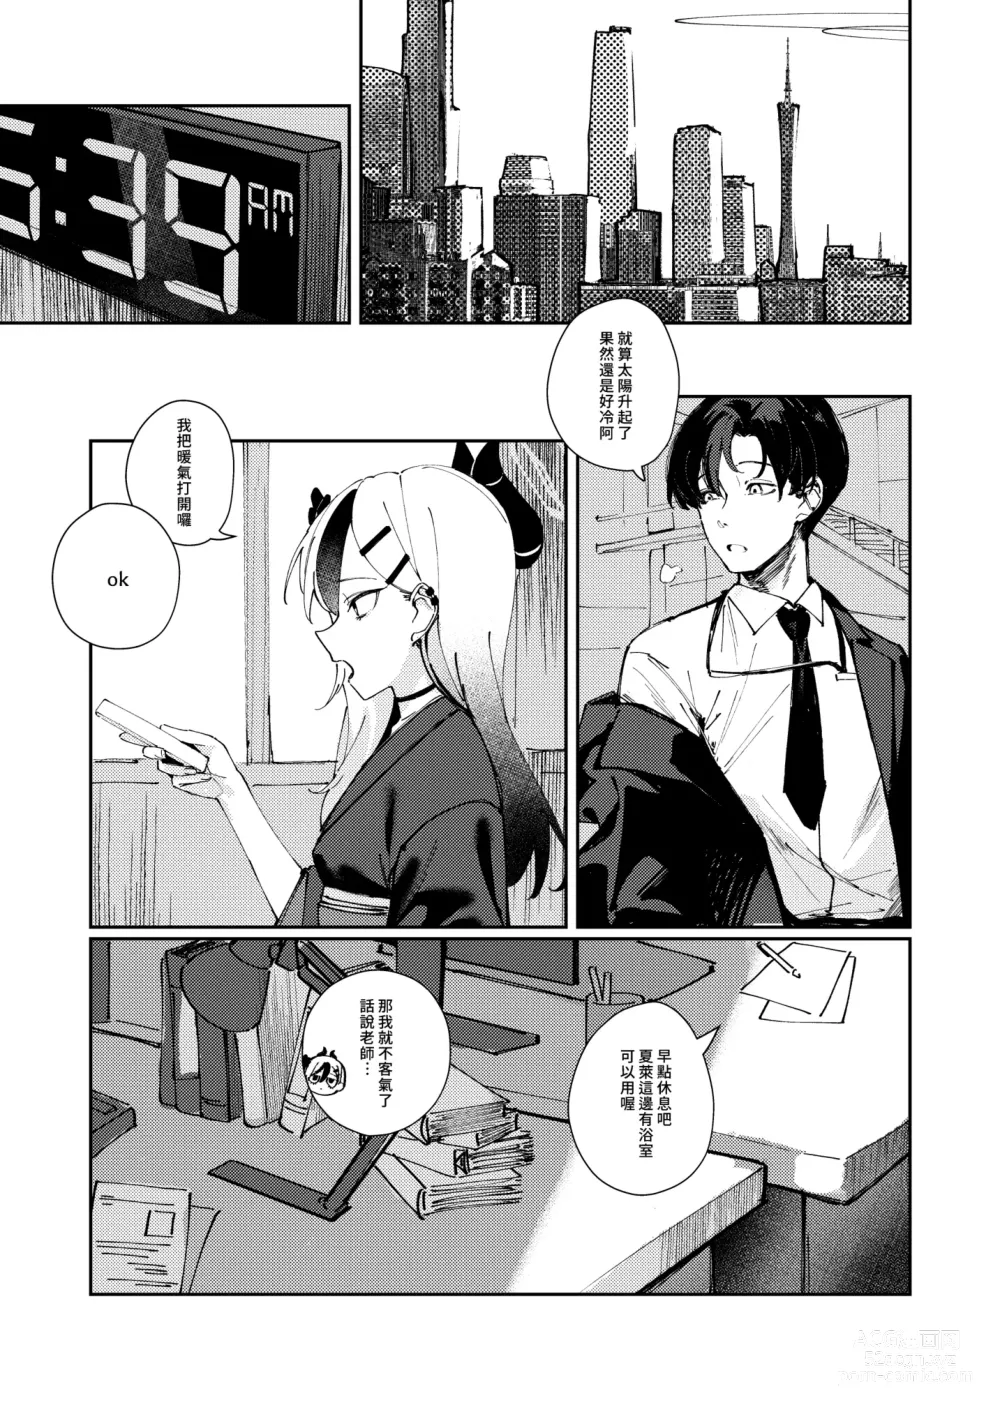 Page 3 of doujinshi 簡直就像戀人一樣